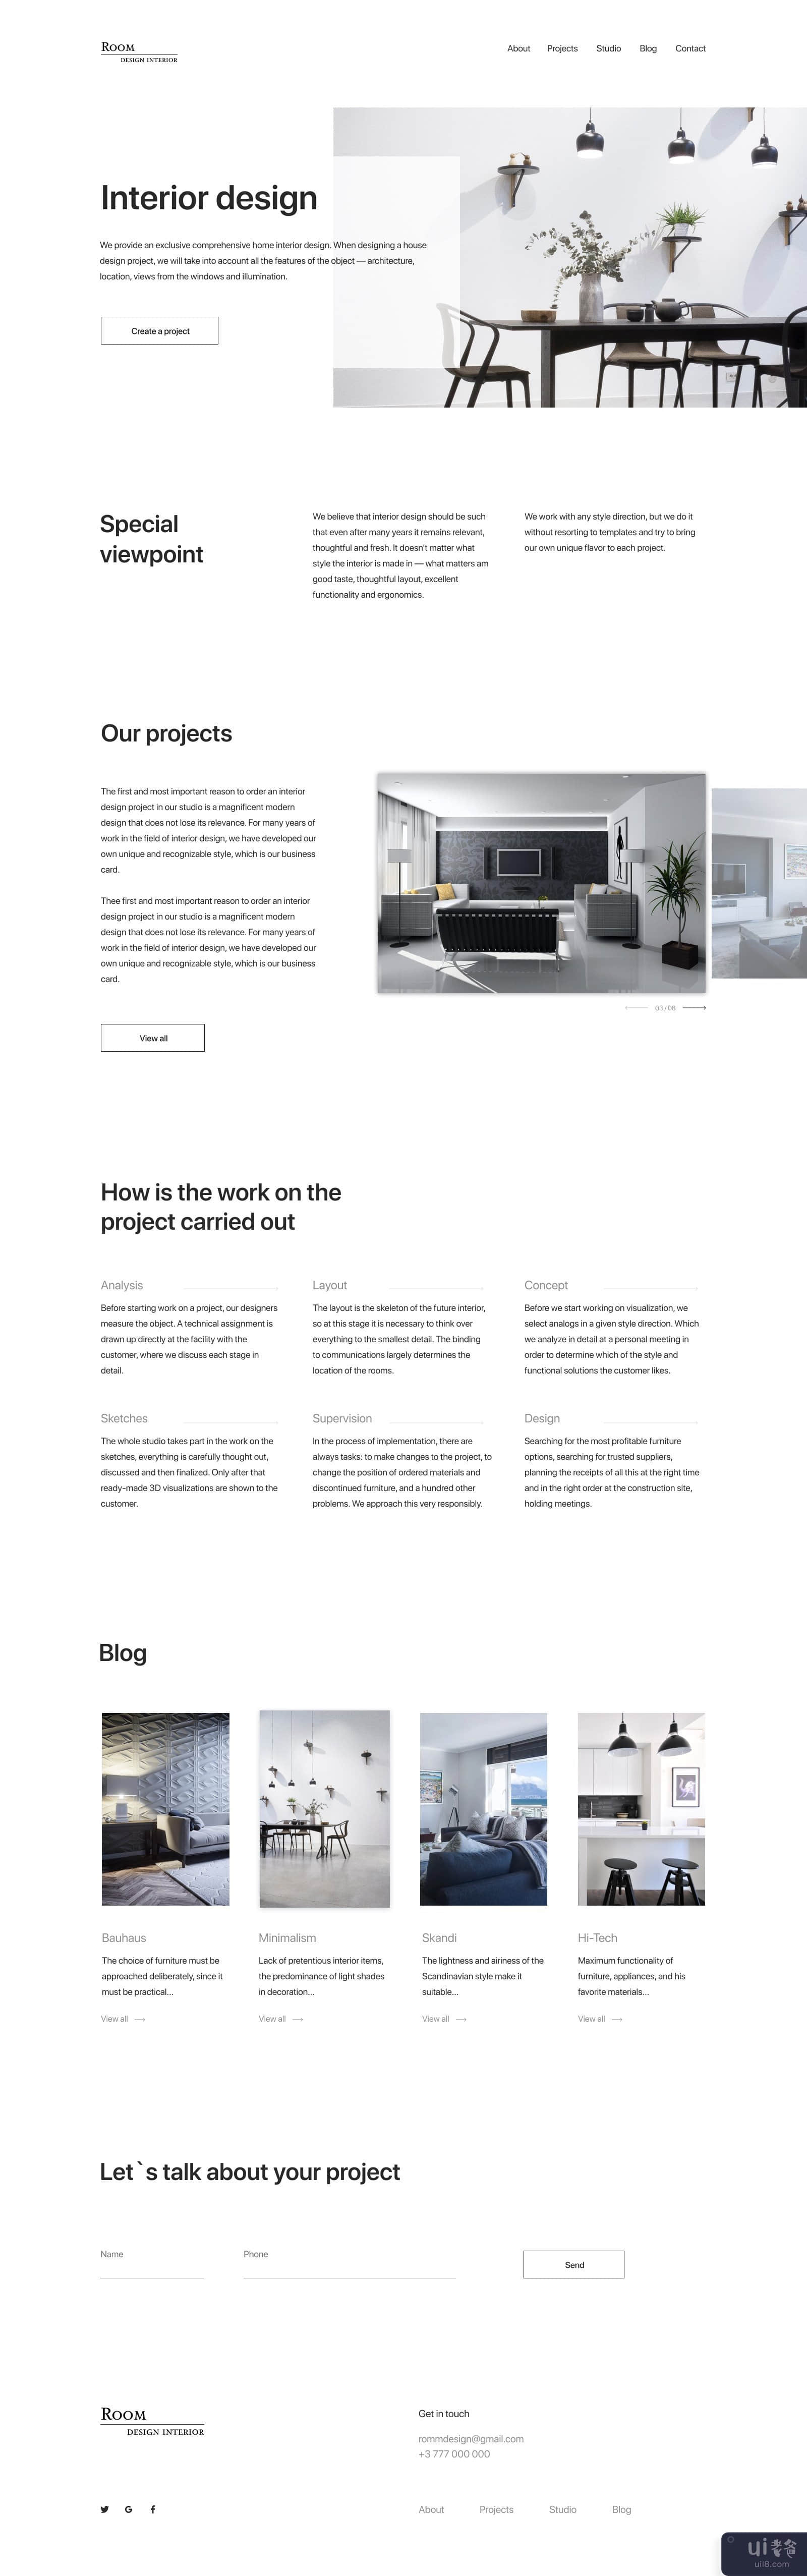 室内设计网站(Interior design website)插图